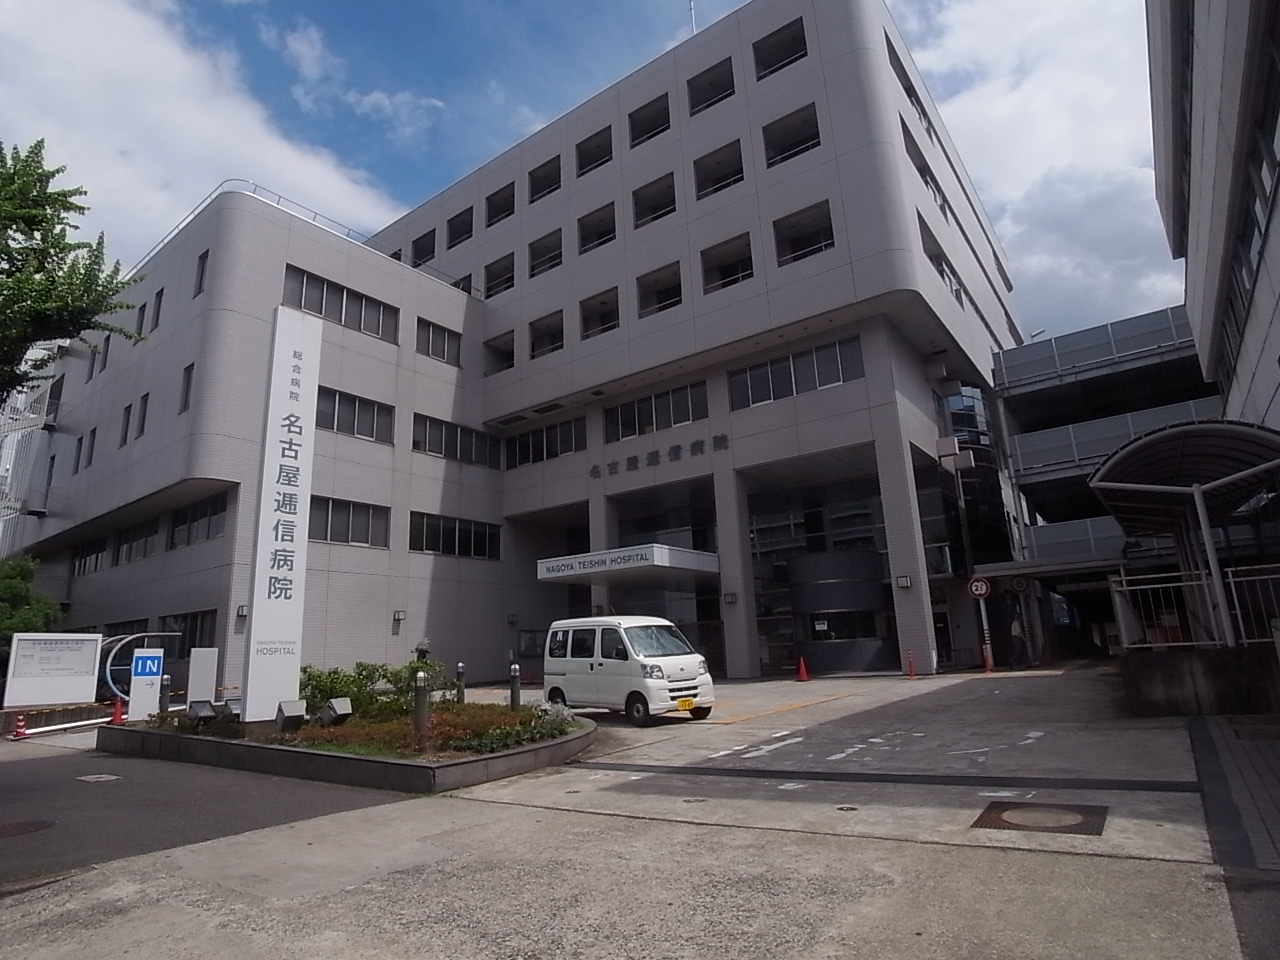 Hospital. 320m to Nagoya Teishin hospital (hospital)